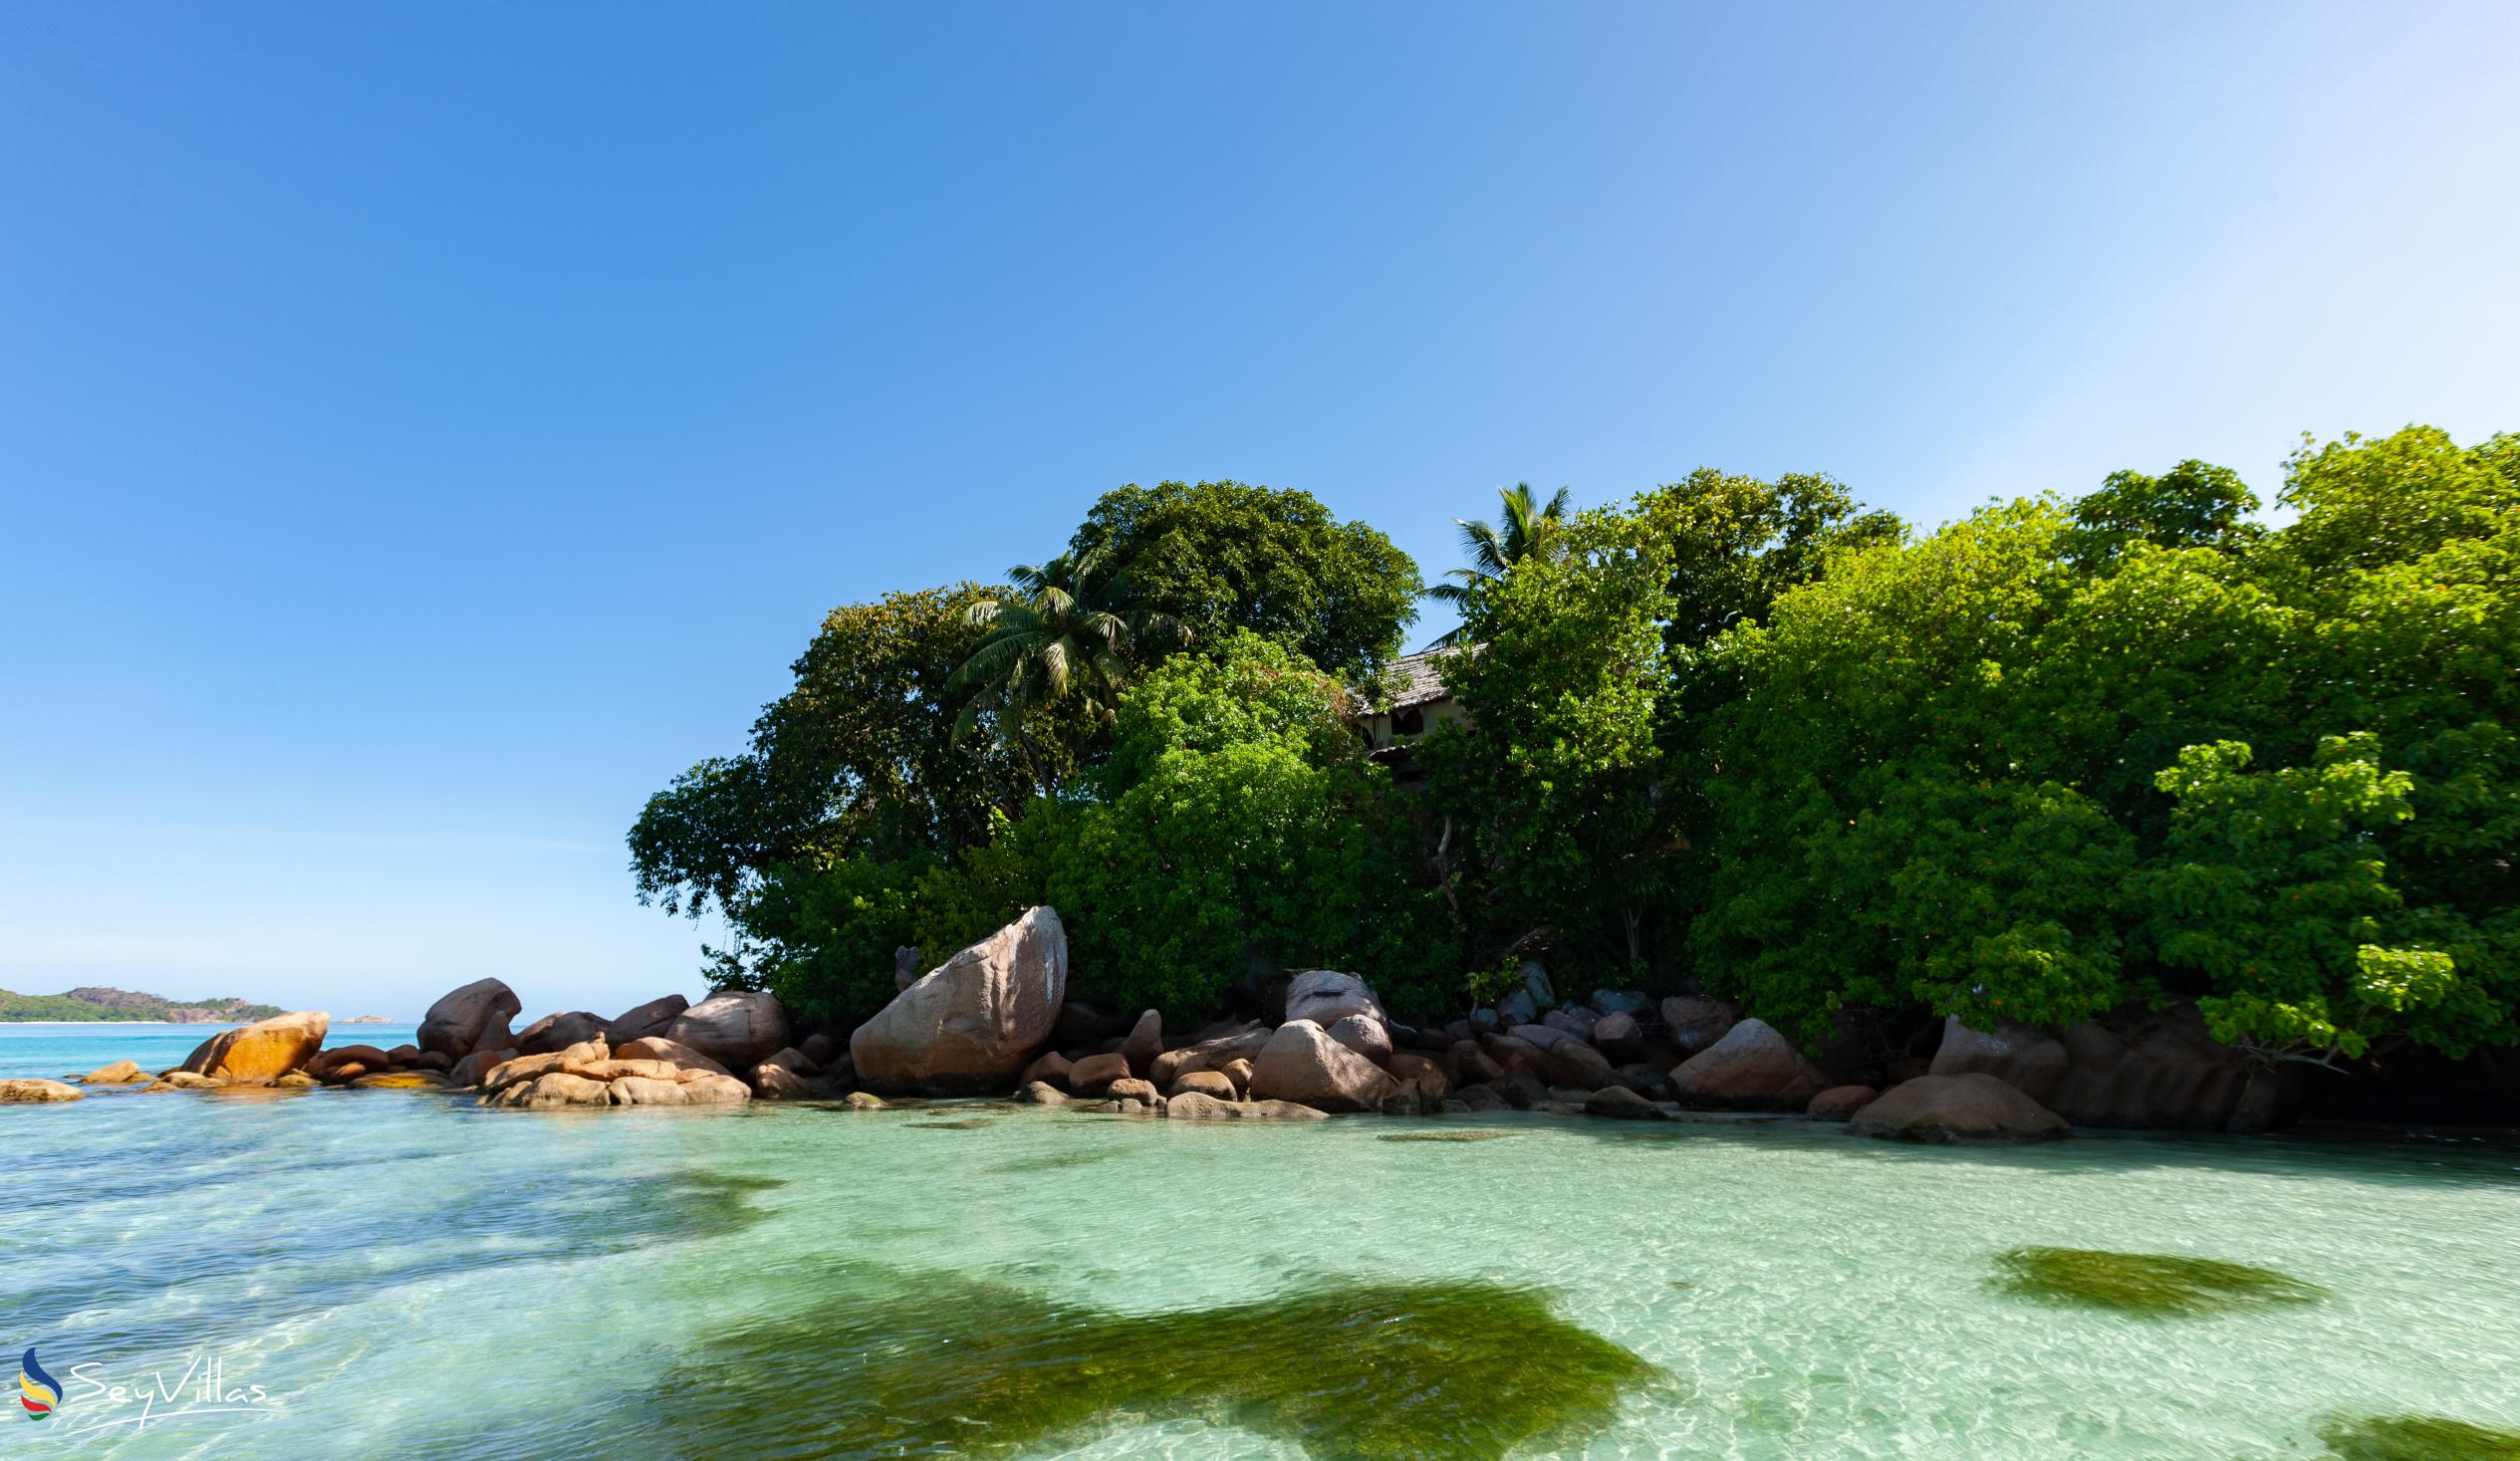 Foto 24: Chauve Souris Relais - Posizione - Praslin (Seychelles)